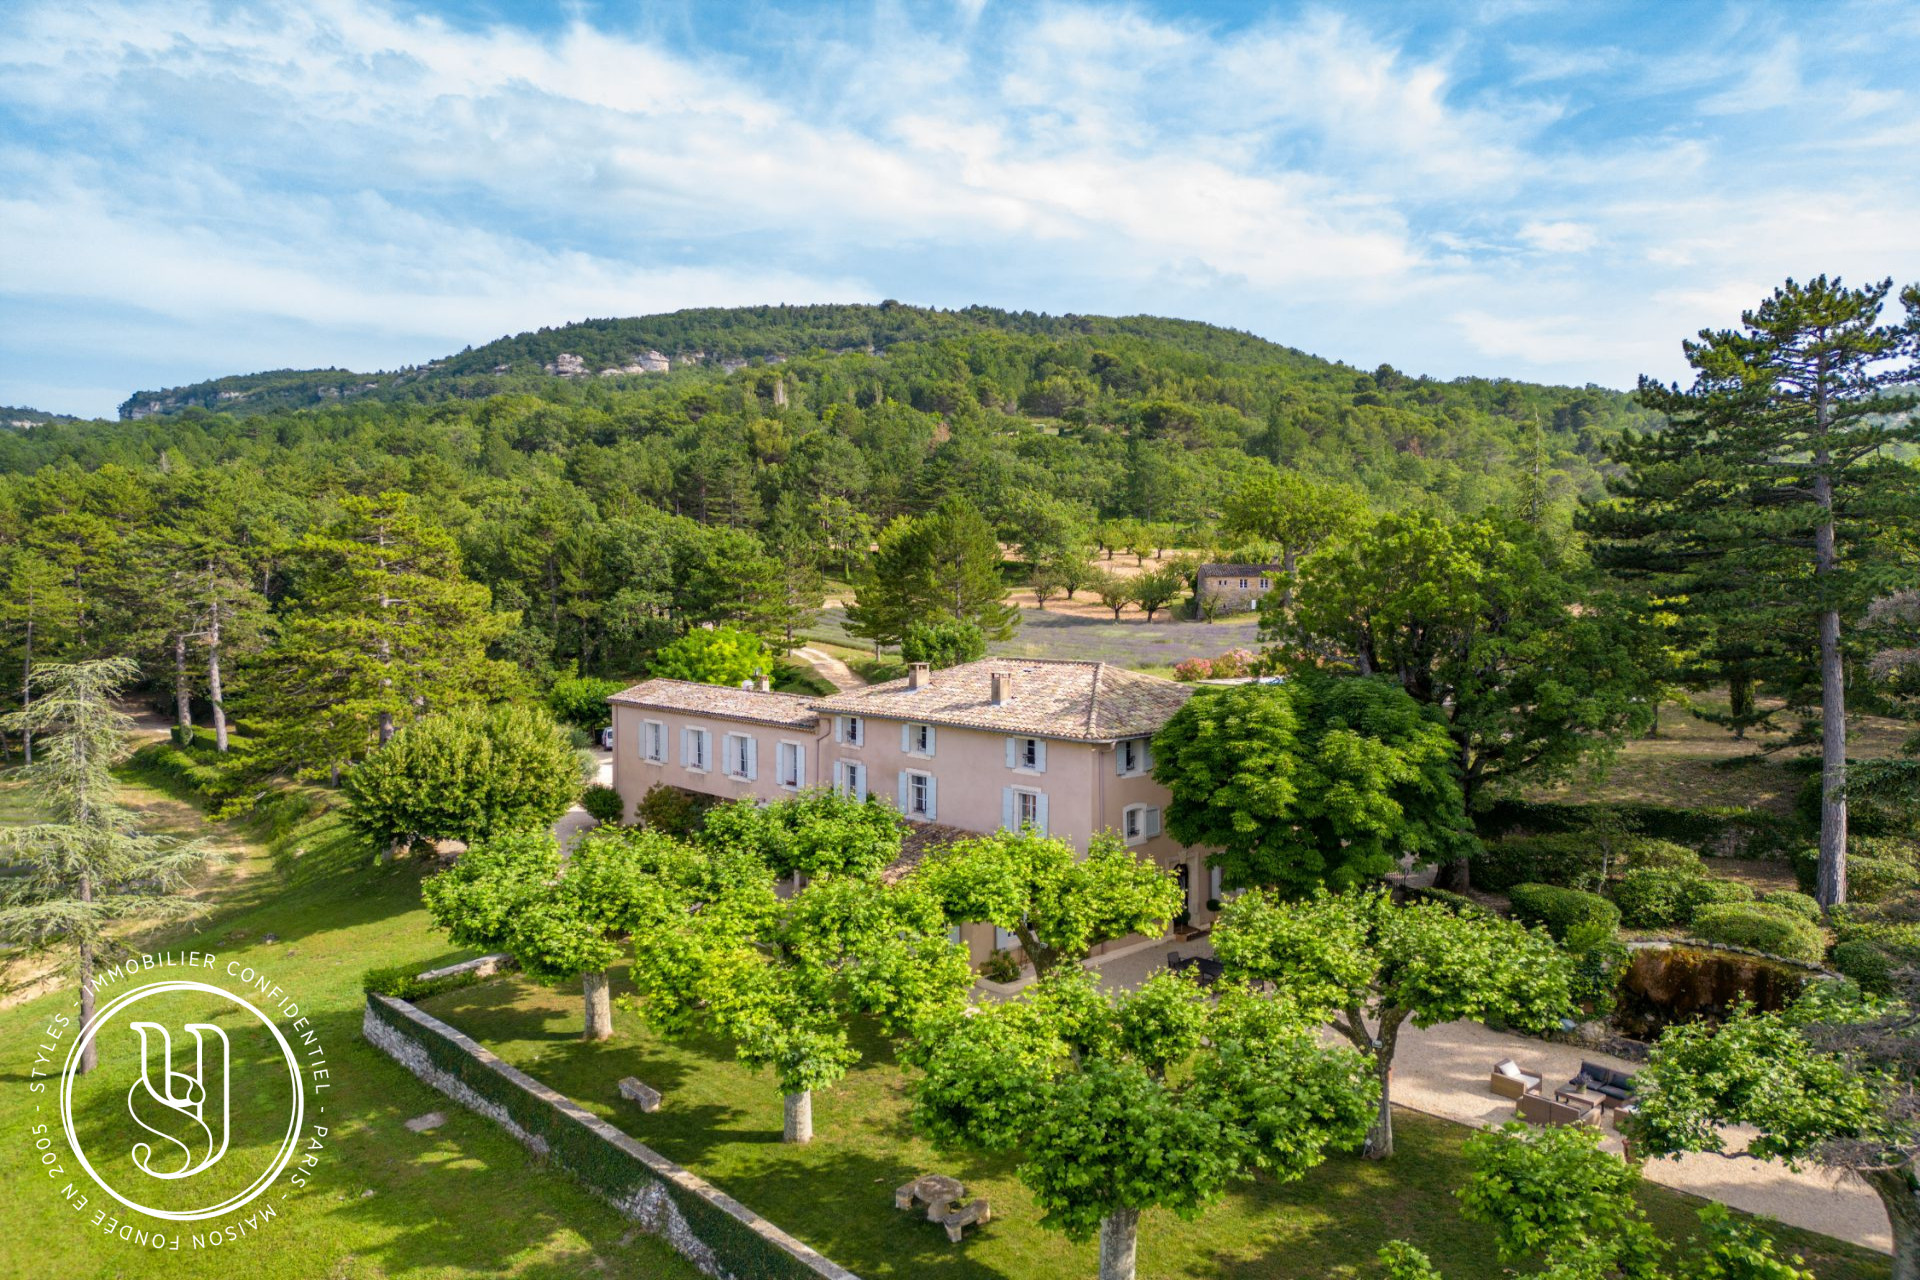 Saignon - a Provençal countryside with breathtaking views - image 14